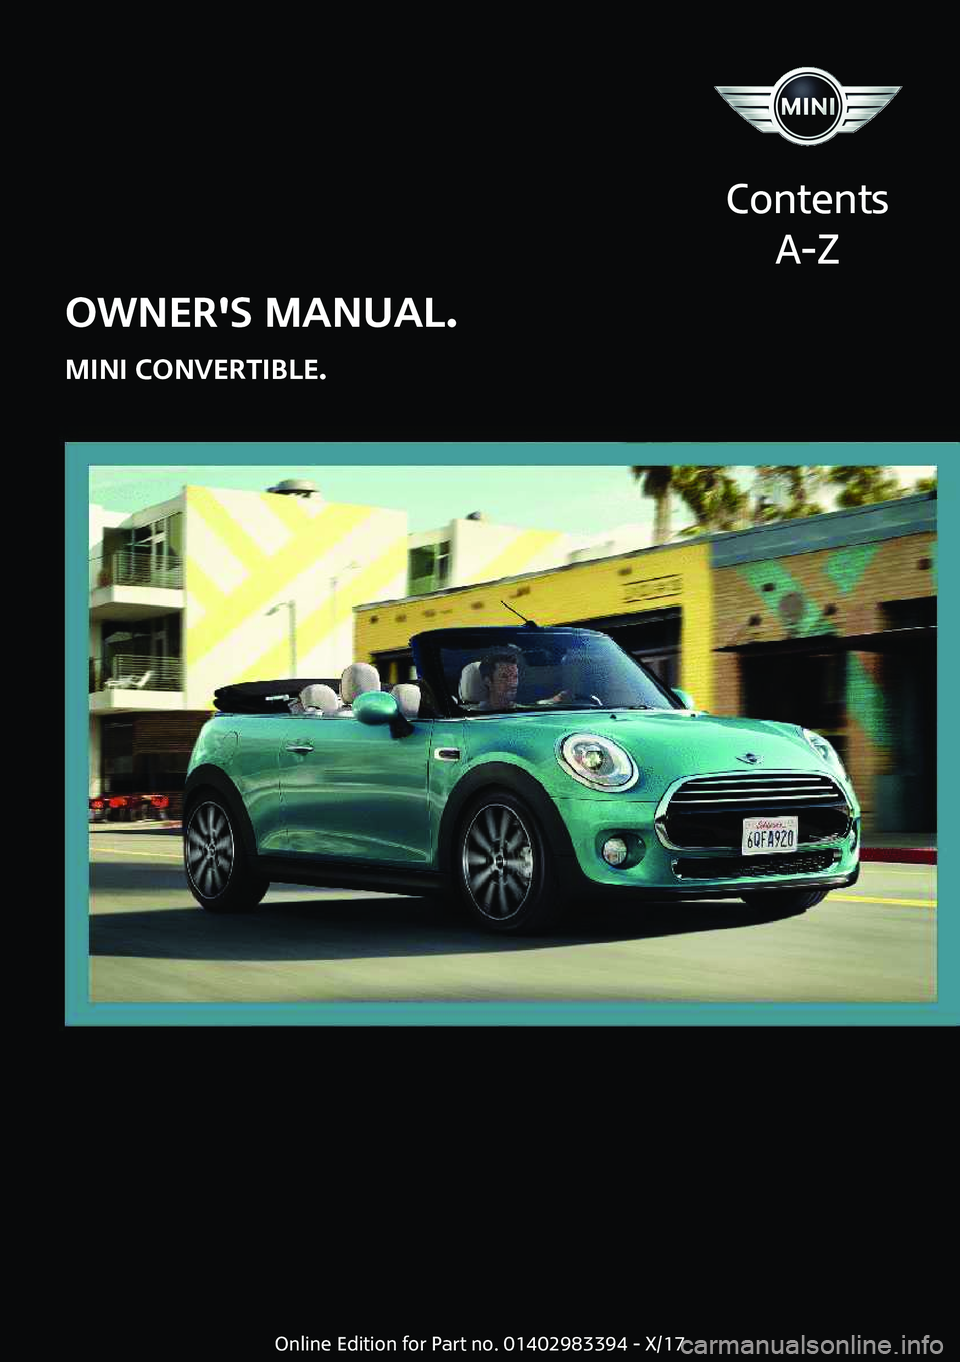 MINI COOPER CONVERTIBLE 2018  Owners Manual �O�W�N�E�R�'�S��M�A�N�U�A�L�.
�M�I�N�I��C�O�N�V�E�R�T�I�B�L�E�.
�C�o�n�t�e�n�t�s �A�-�Z�O�n�l�i�n�e� �E�d�i�t�i�o�n� �f�o�r� �P�a�r�t� �n�o�.� �0�1�4�0�2�9�8�3�3�9�4� �-� �X�/�1�7  